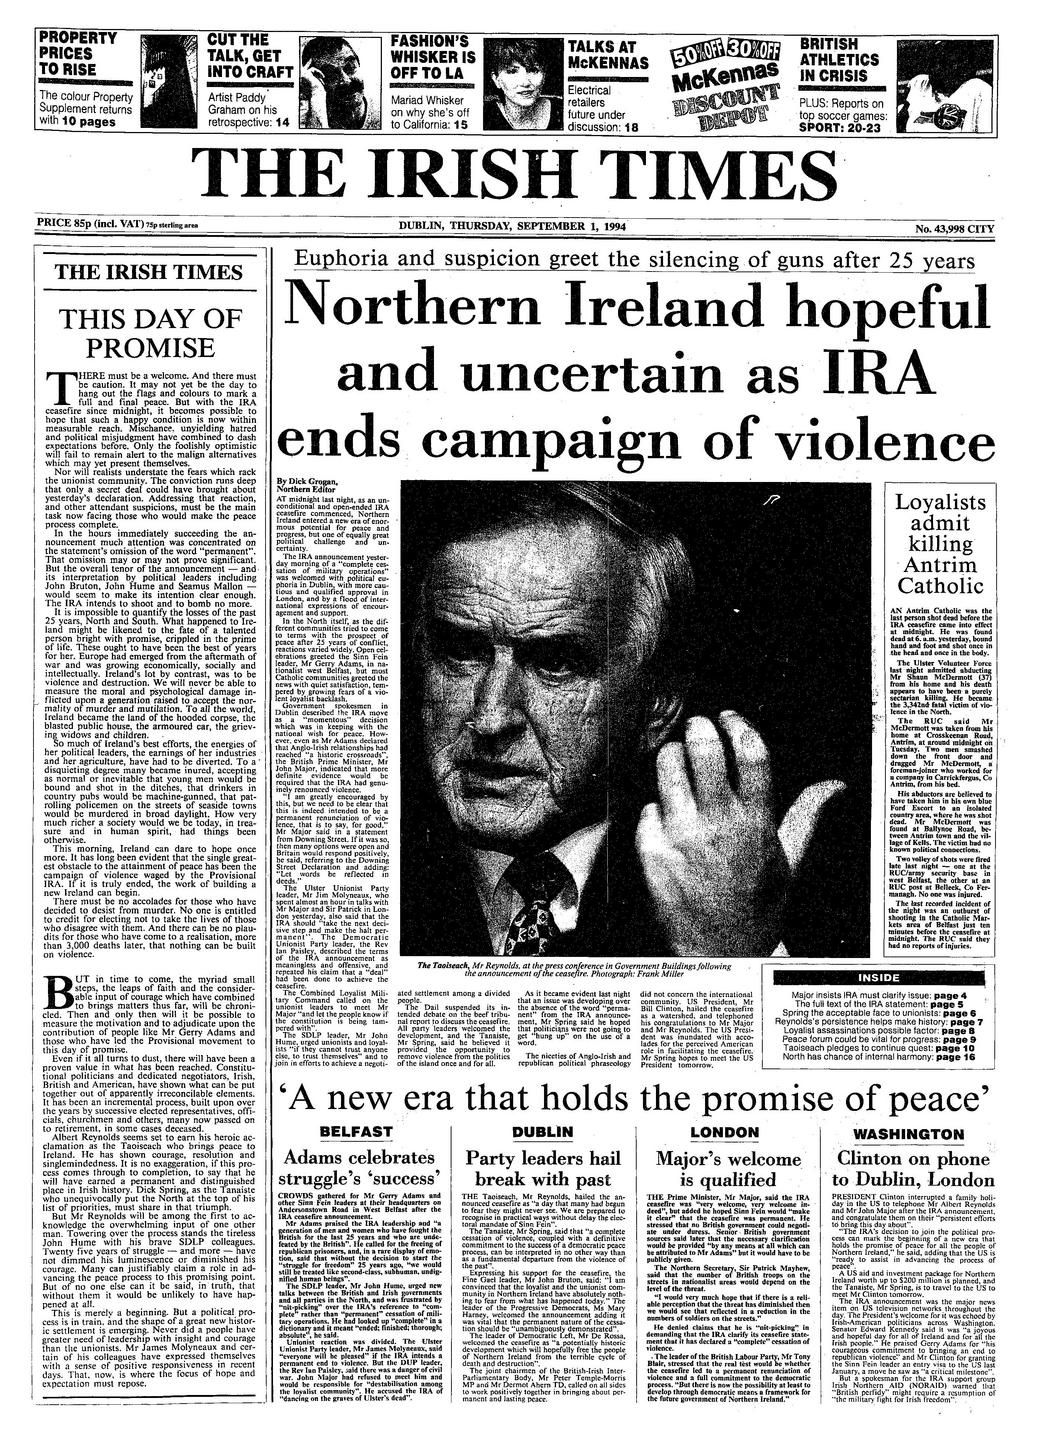 DEJA VU: The new Ireland debate is reminiscent of the mood of change in 1994